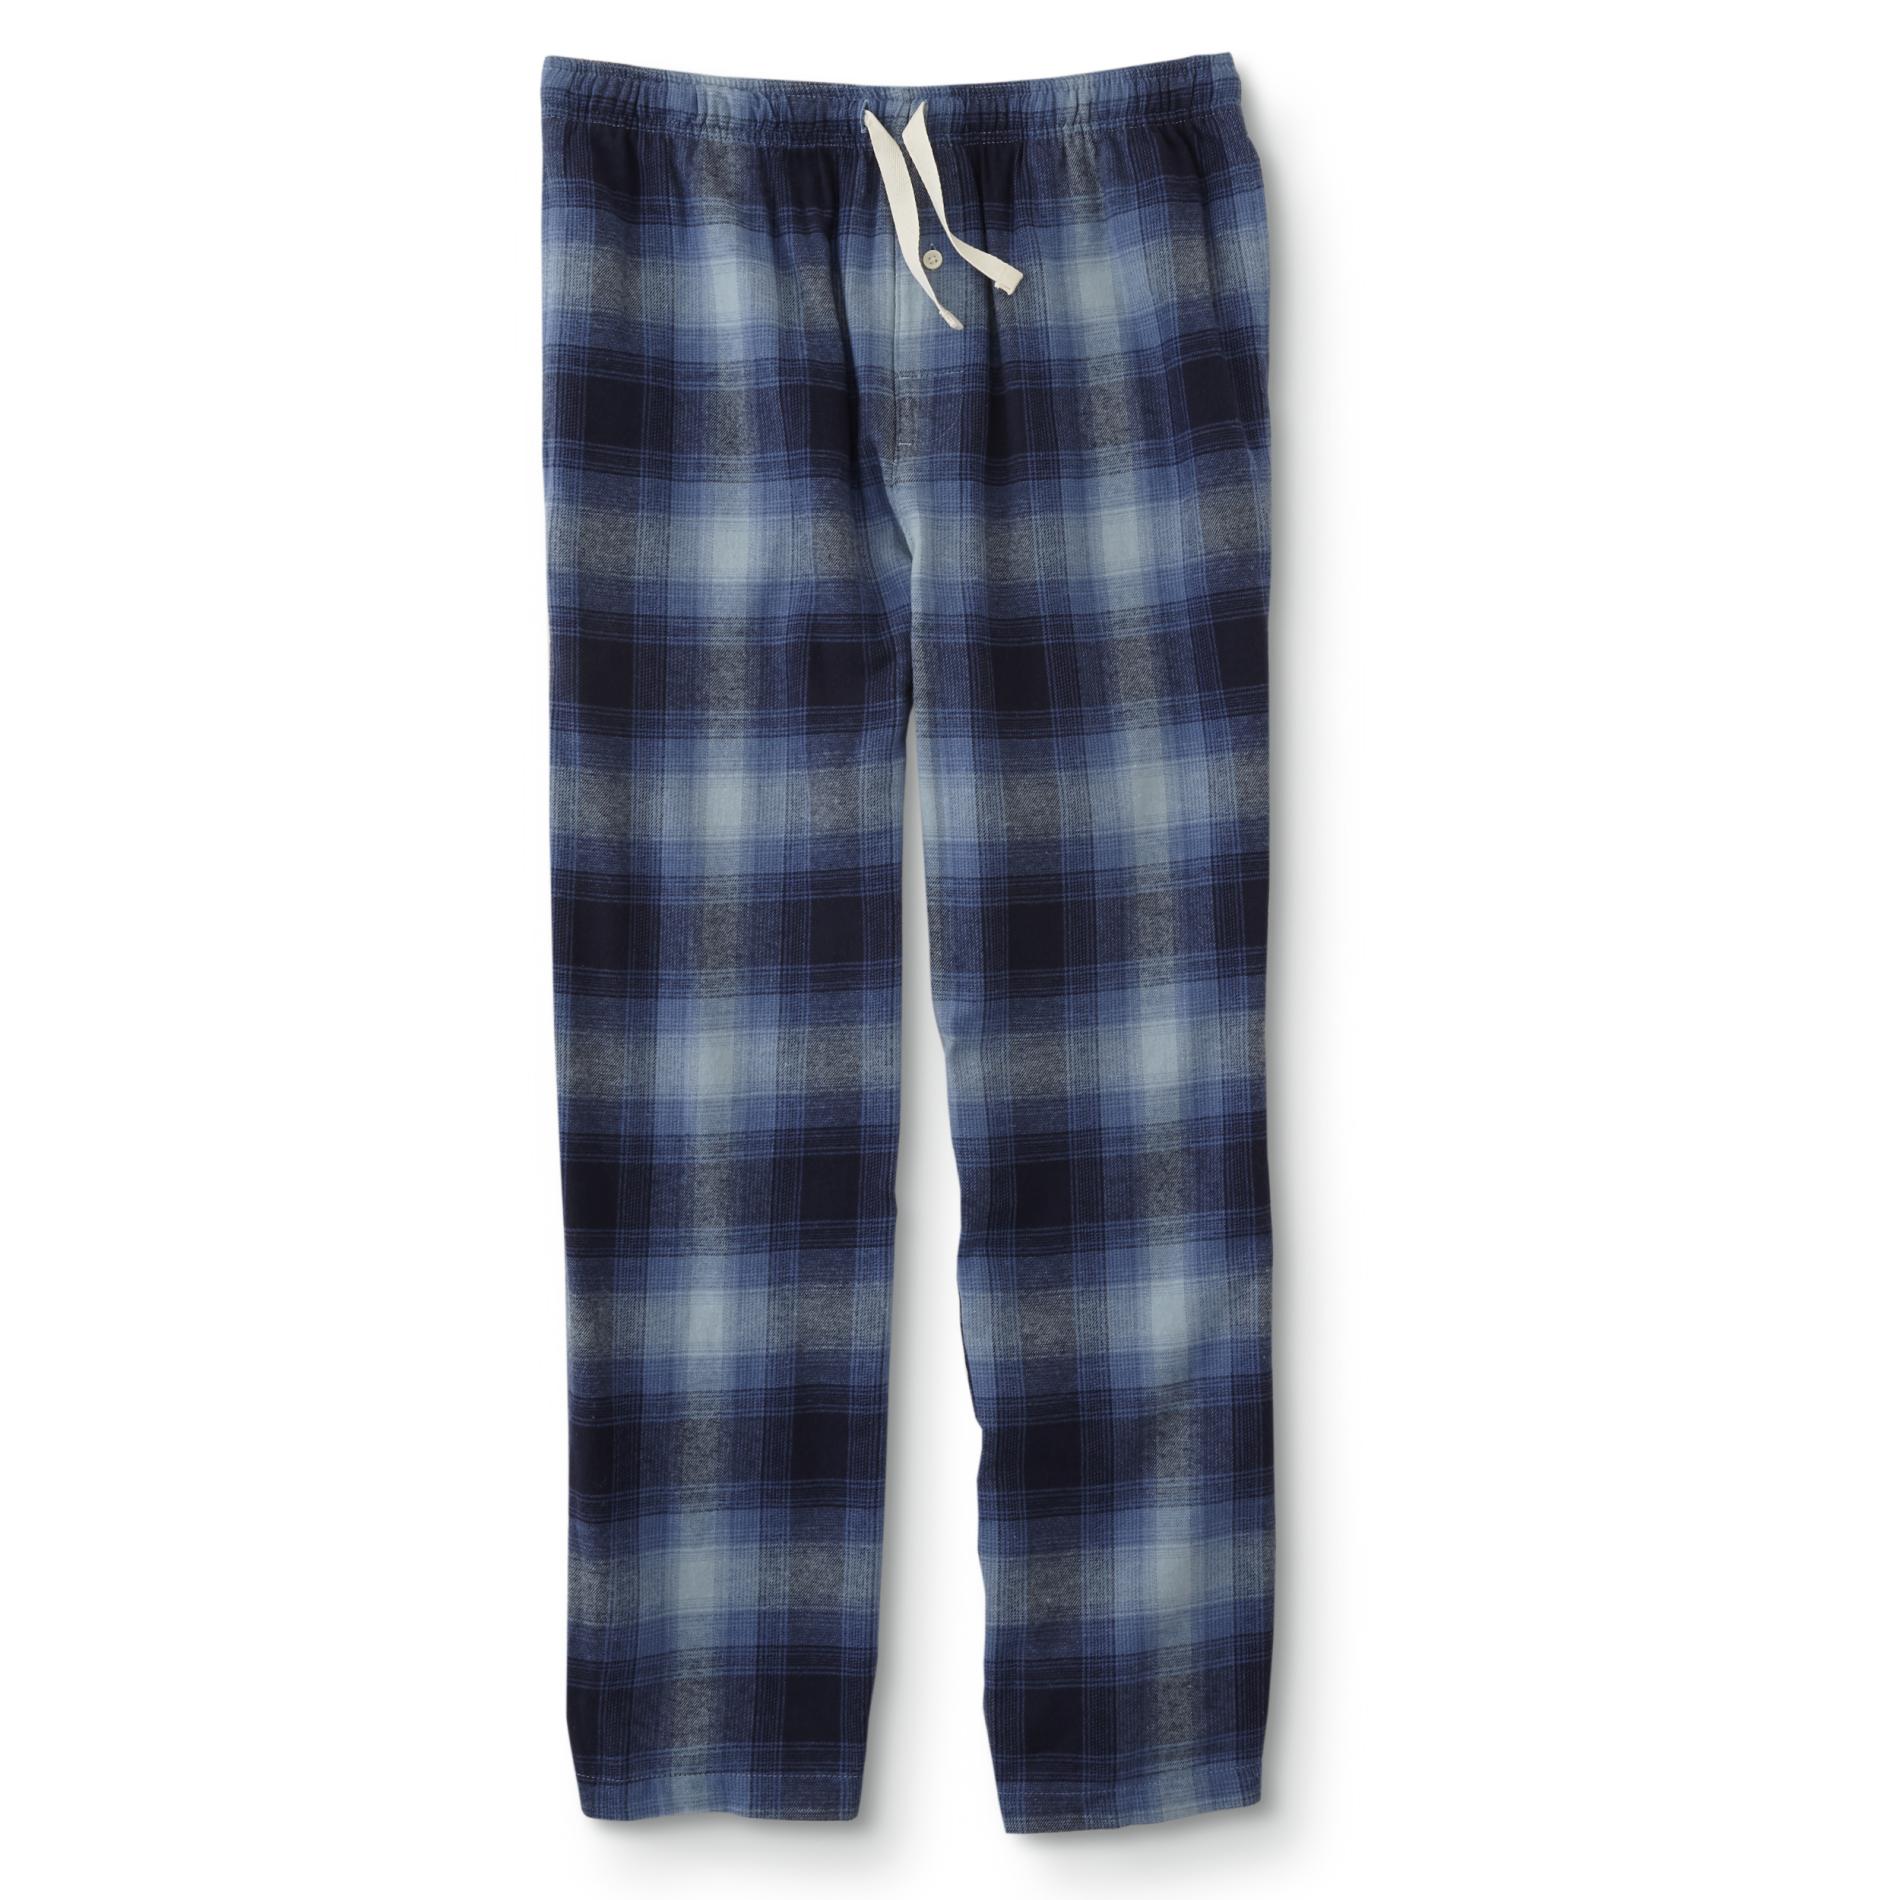 Outdoor Life Men's Flannel Pajama Pants - Plaid